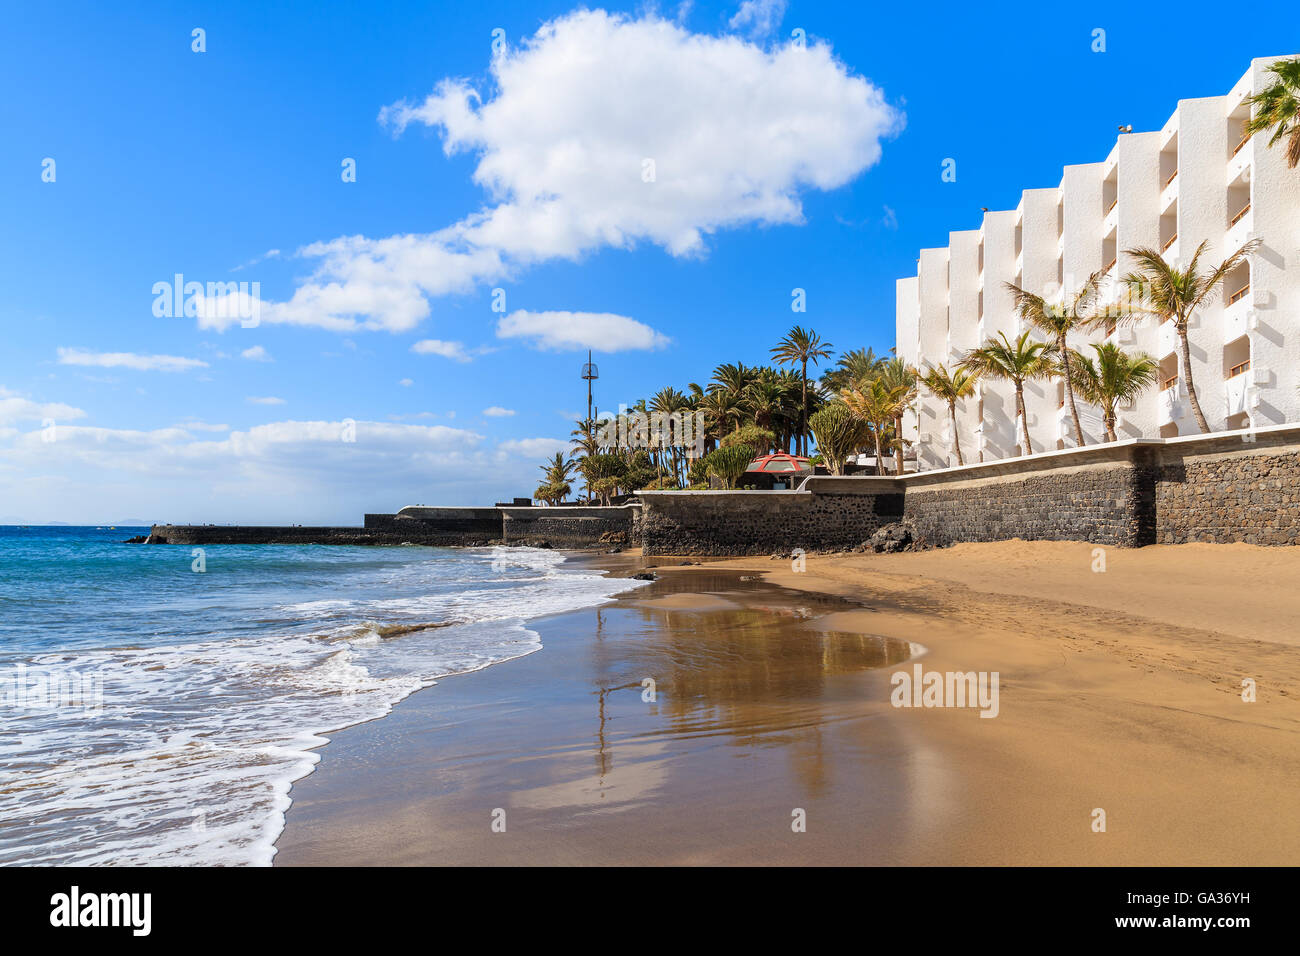 Oceano onda di sabbia spiaggia tropicale in Puerto del Carmen, Lanzarote, Isole Canarie, Spagna Foto Stock